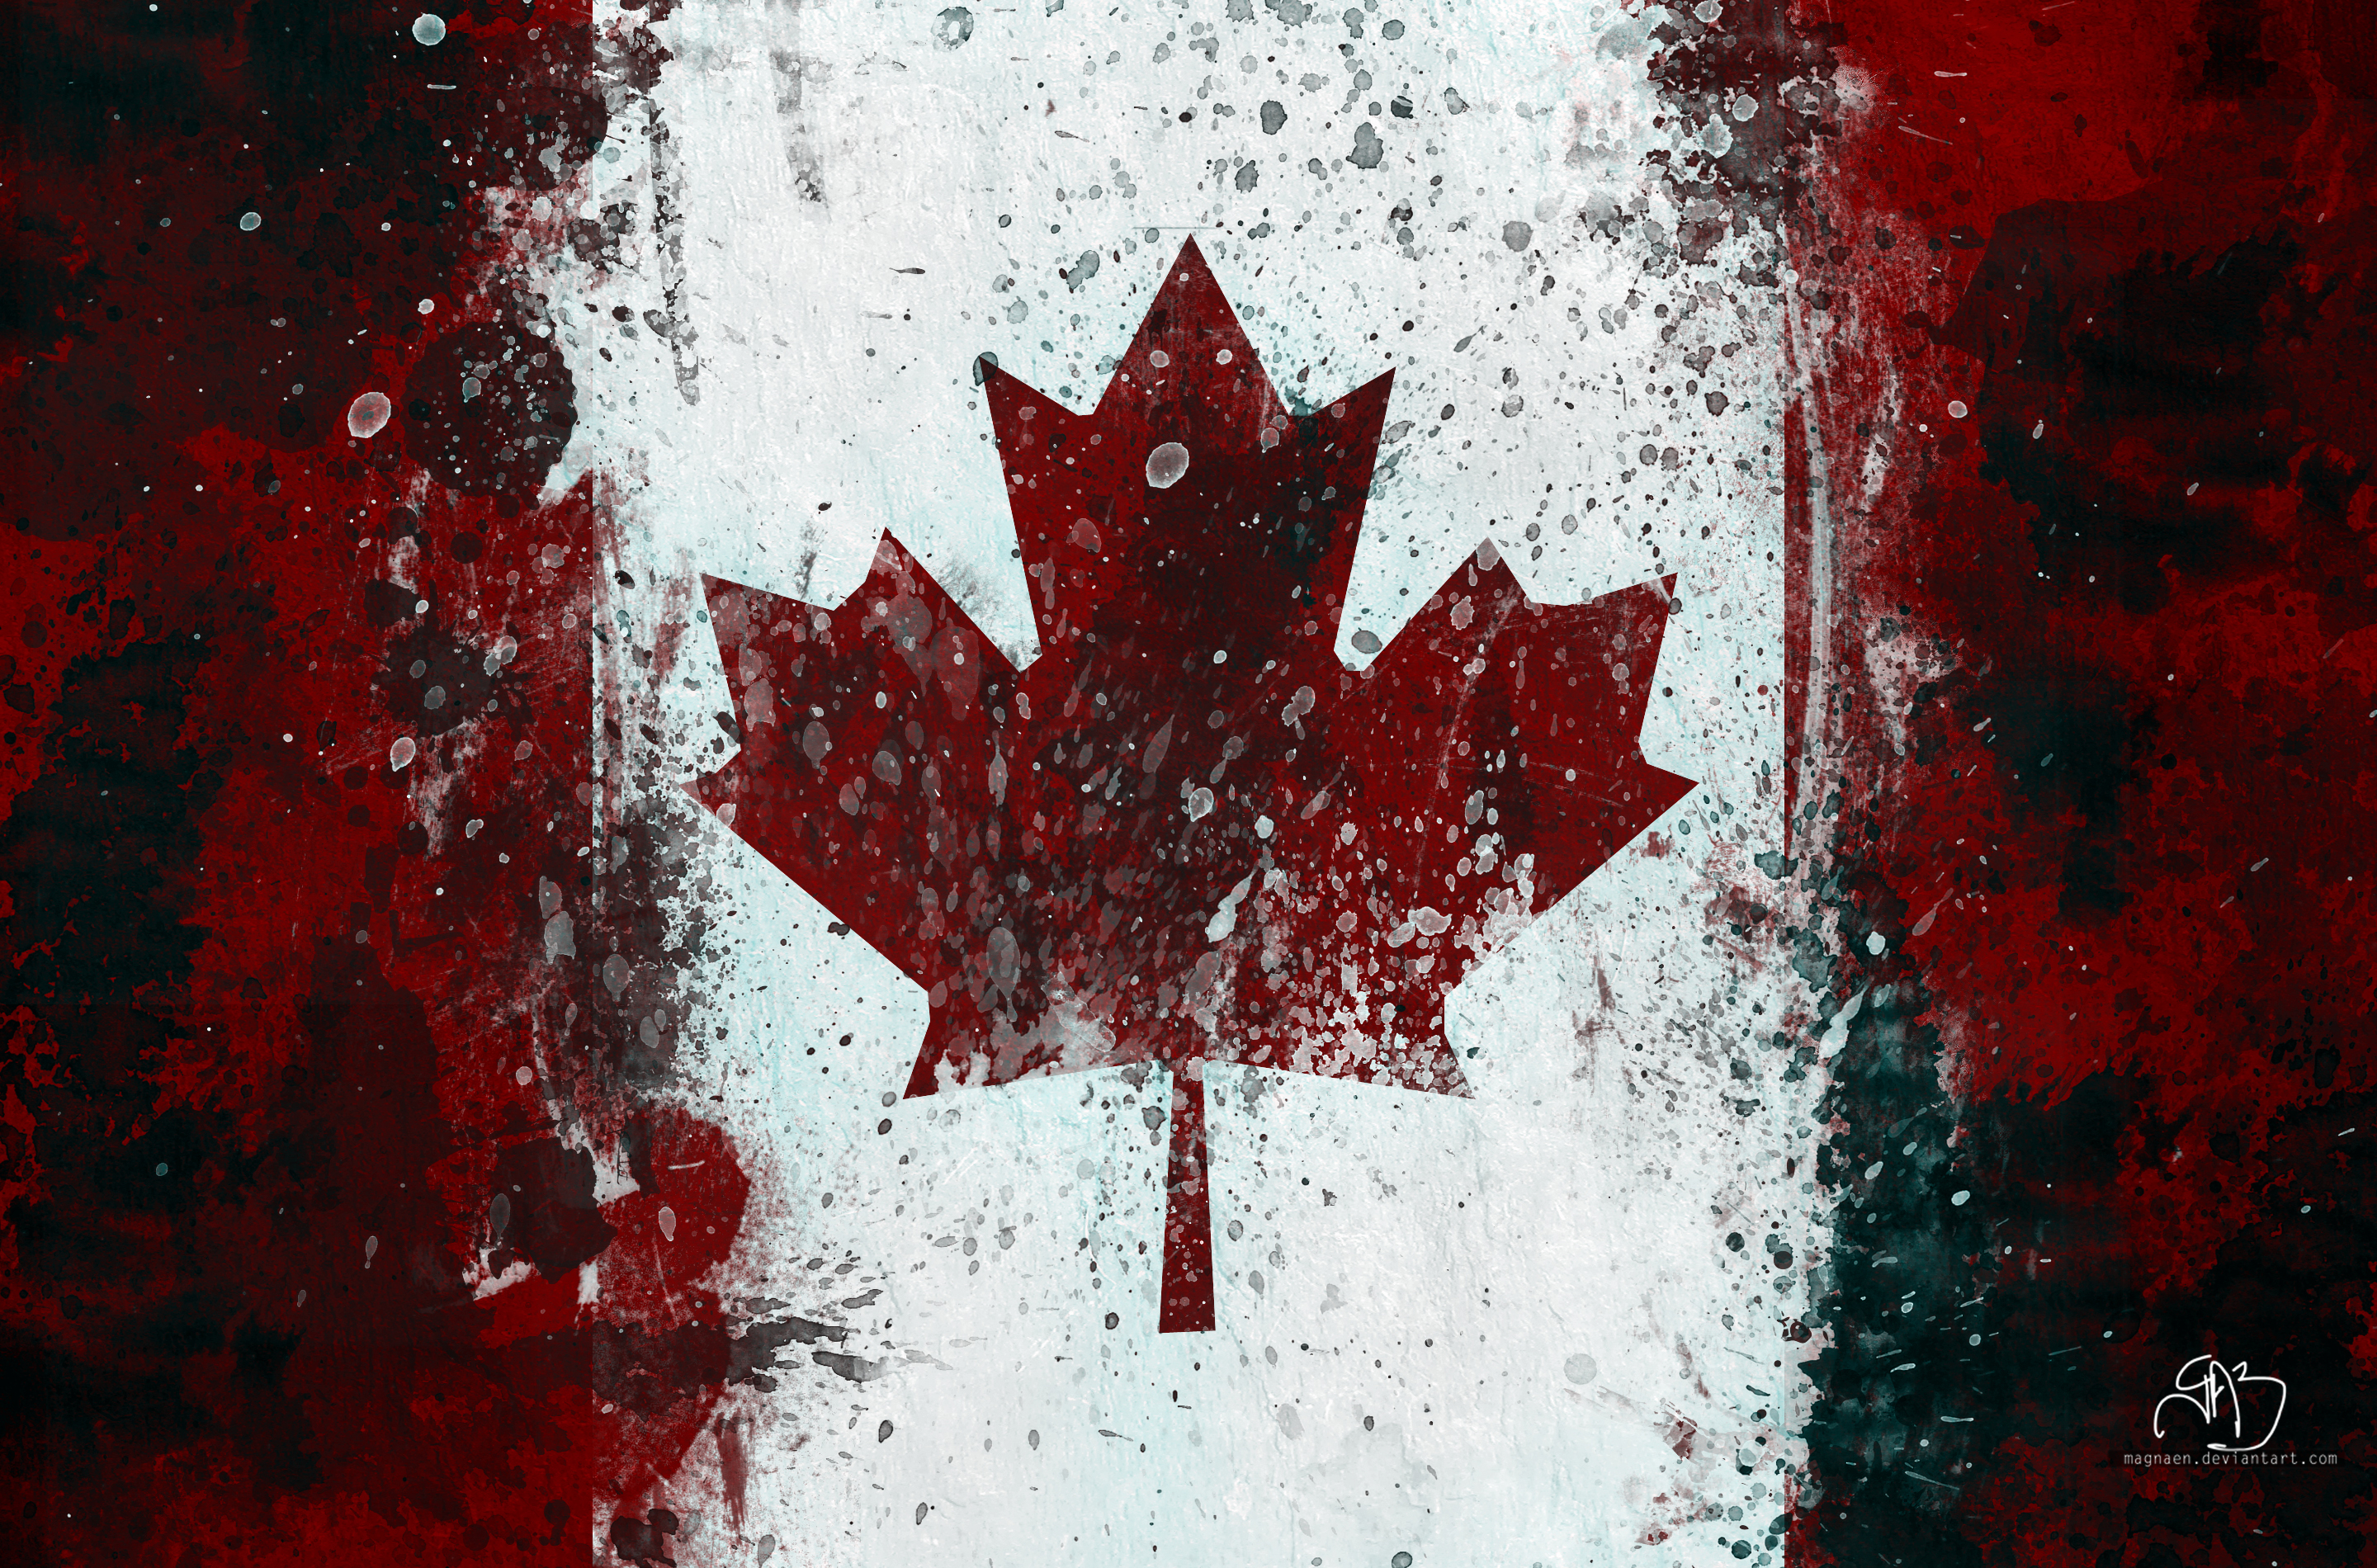 Canada Flag Image